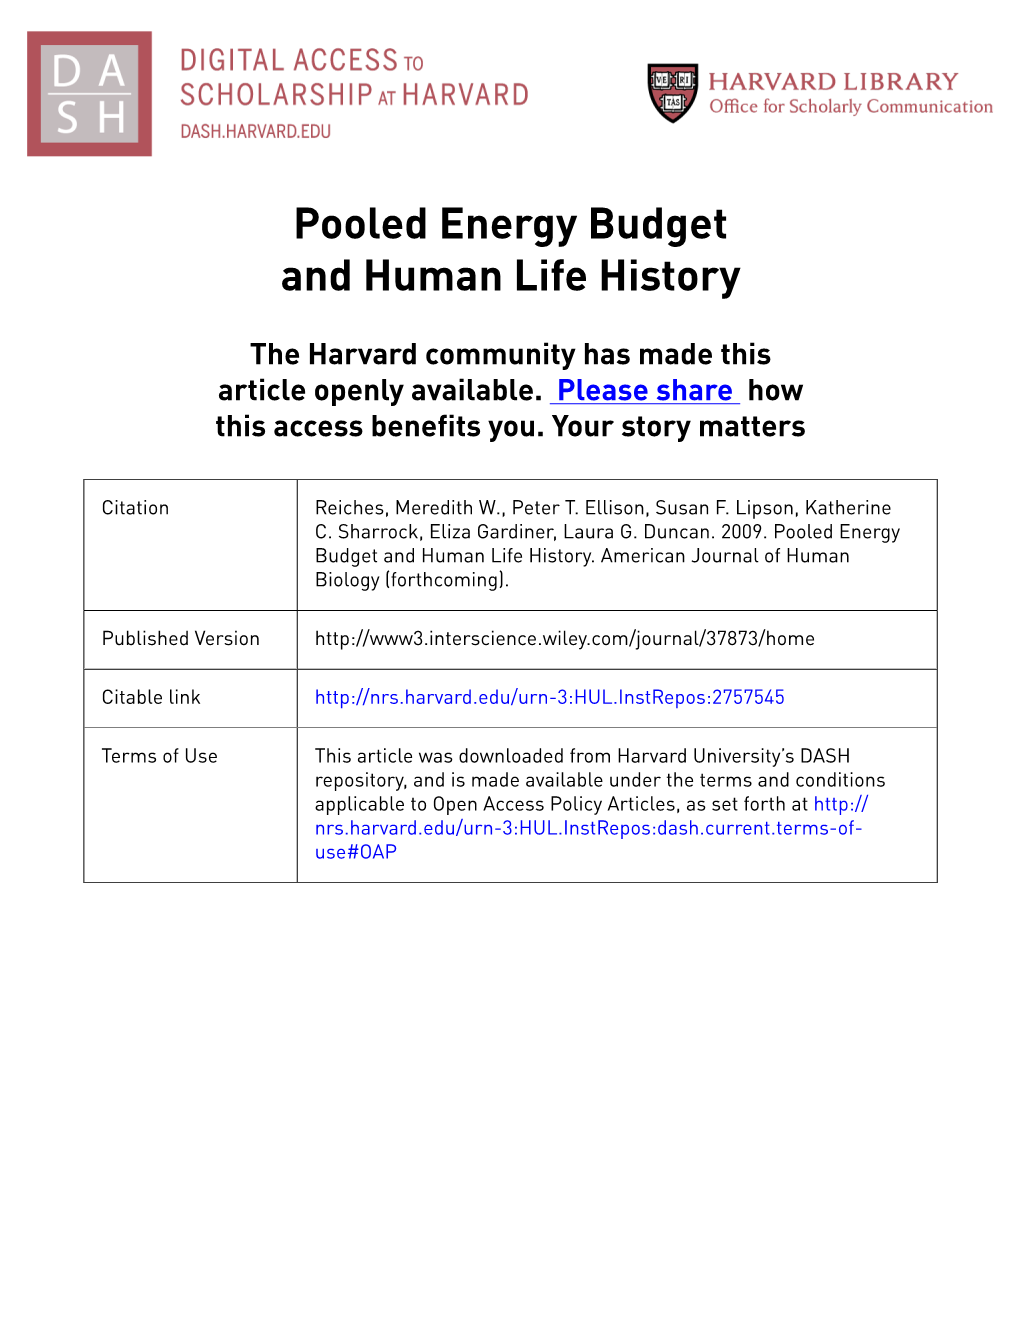 Pooled Energy Budget and Human Life History